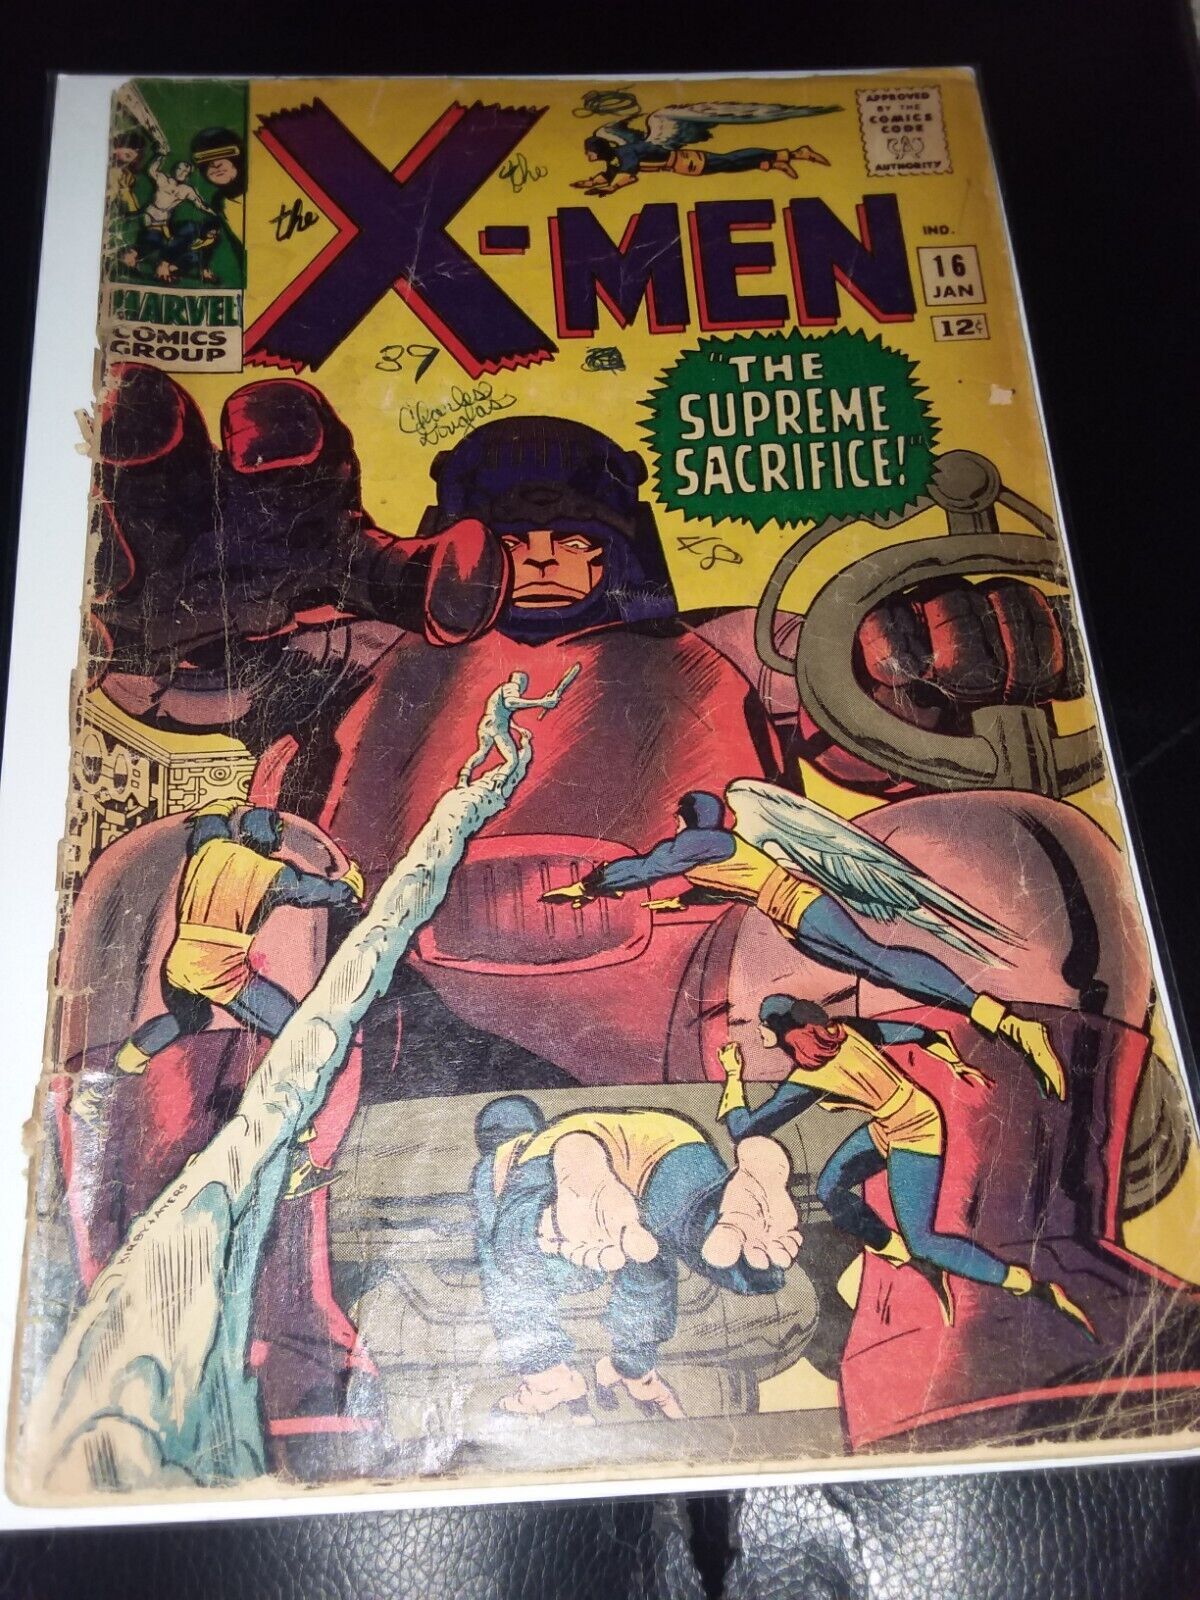 1965 Uncanny X-Men #16 Marvel Comic Book Silver Age